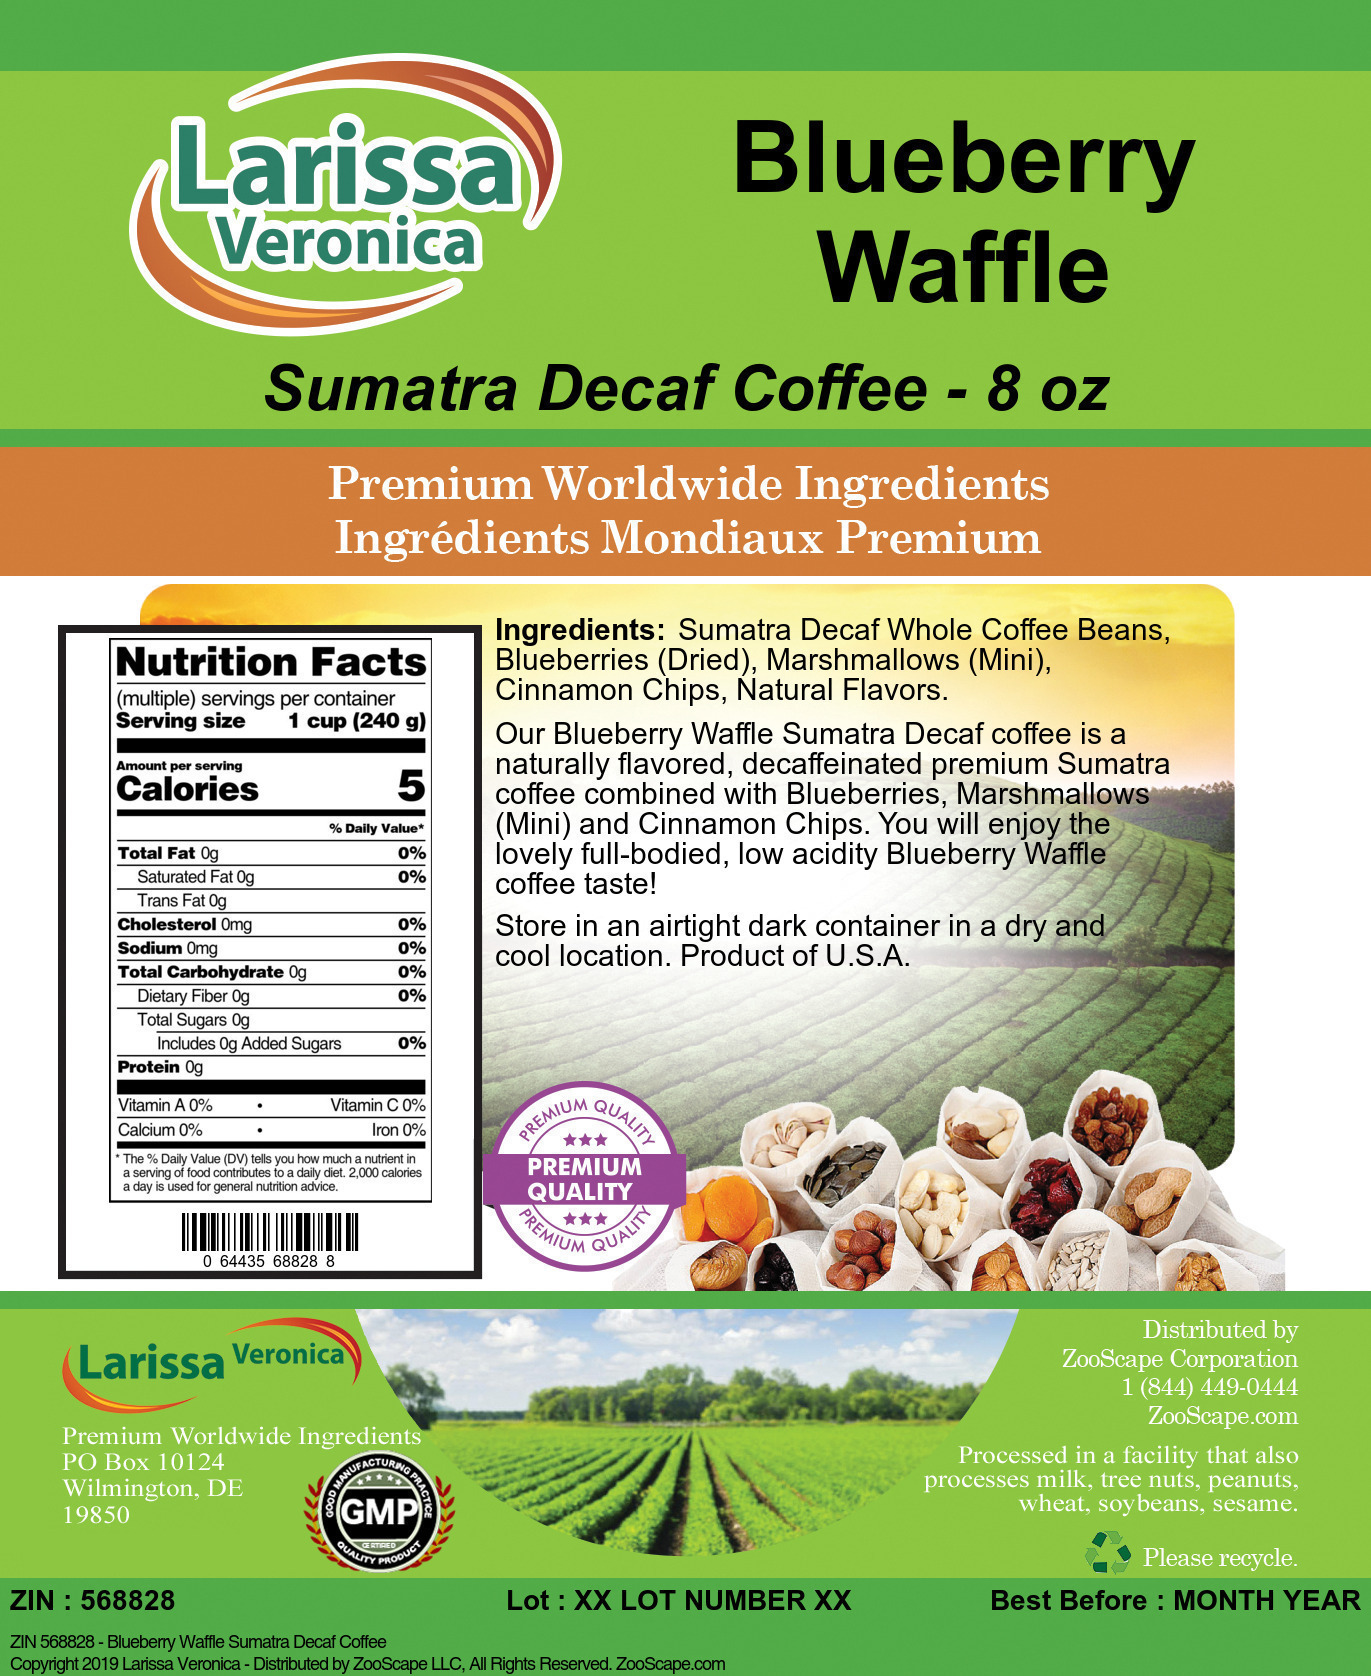 Blueberry Waffle Sumatra Decaf Coffee - Label